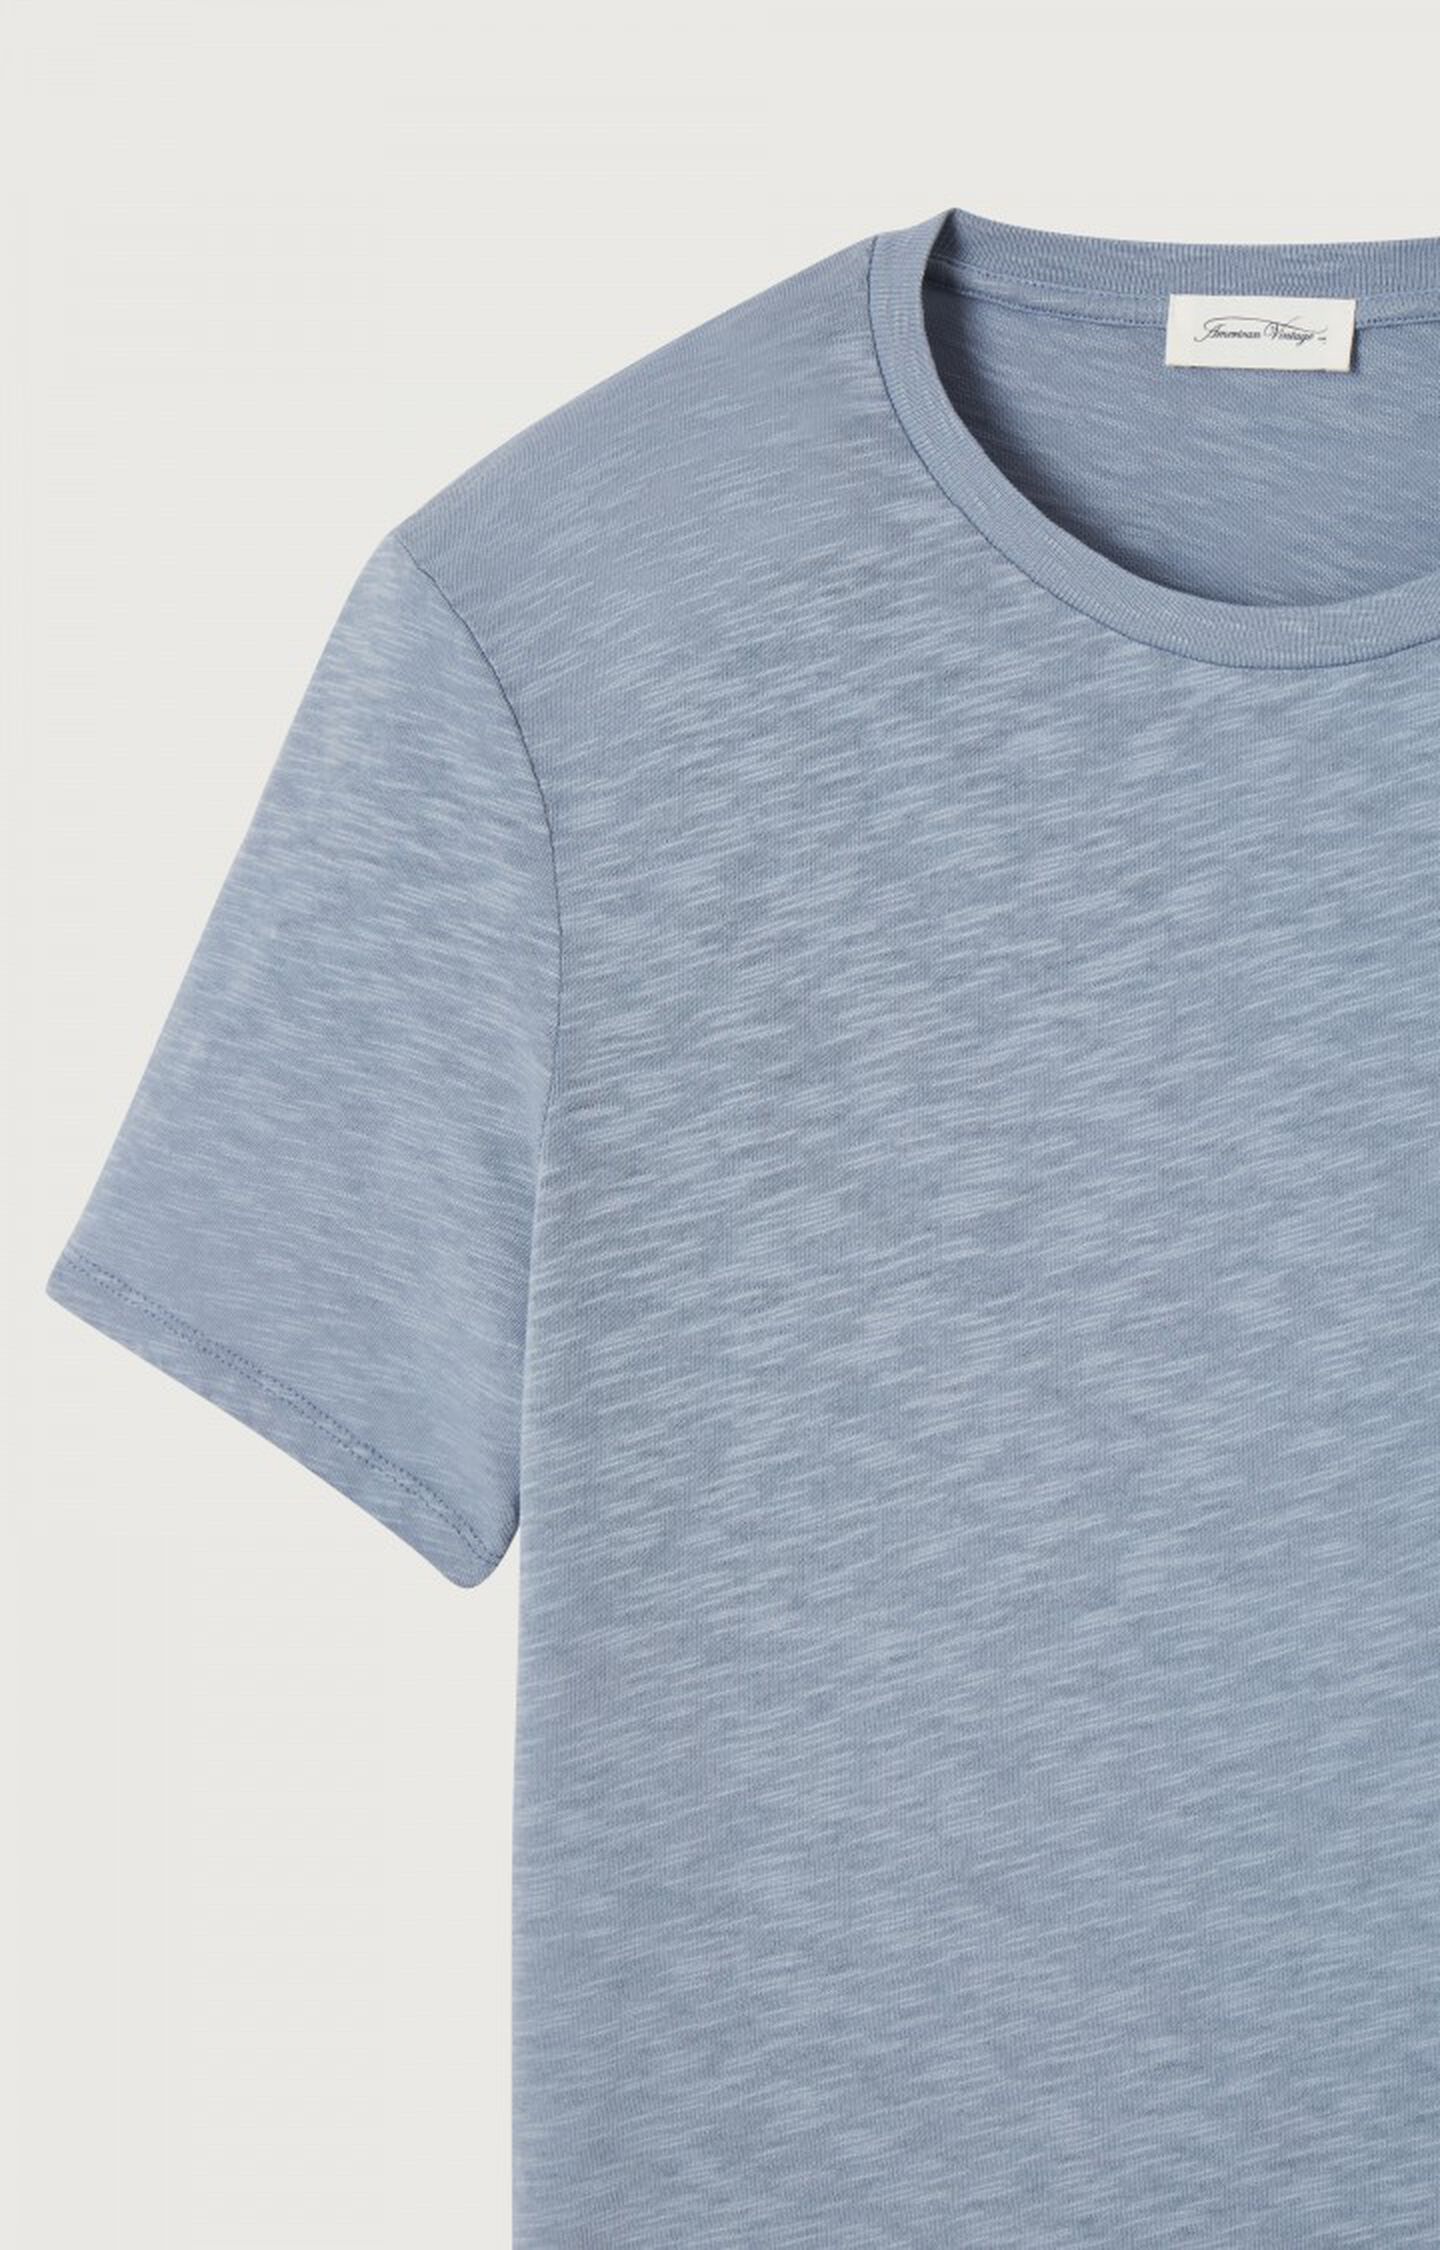 Buy Caspar Embossed T-Shirt (B&T) Men's Shirts from Makobi. Find